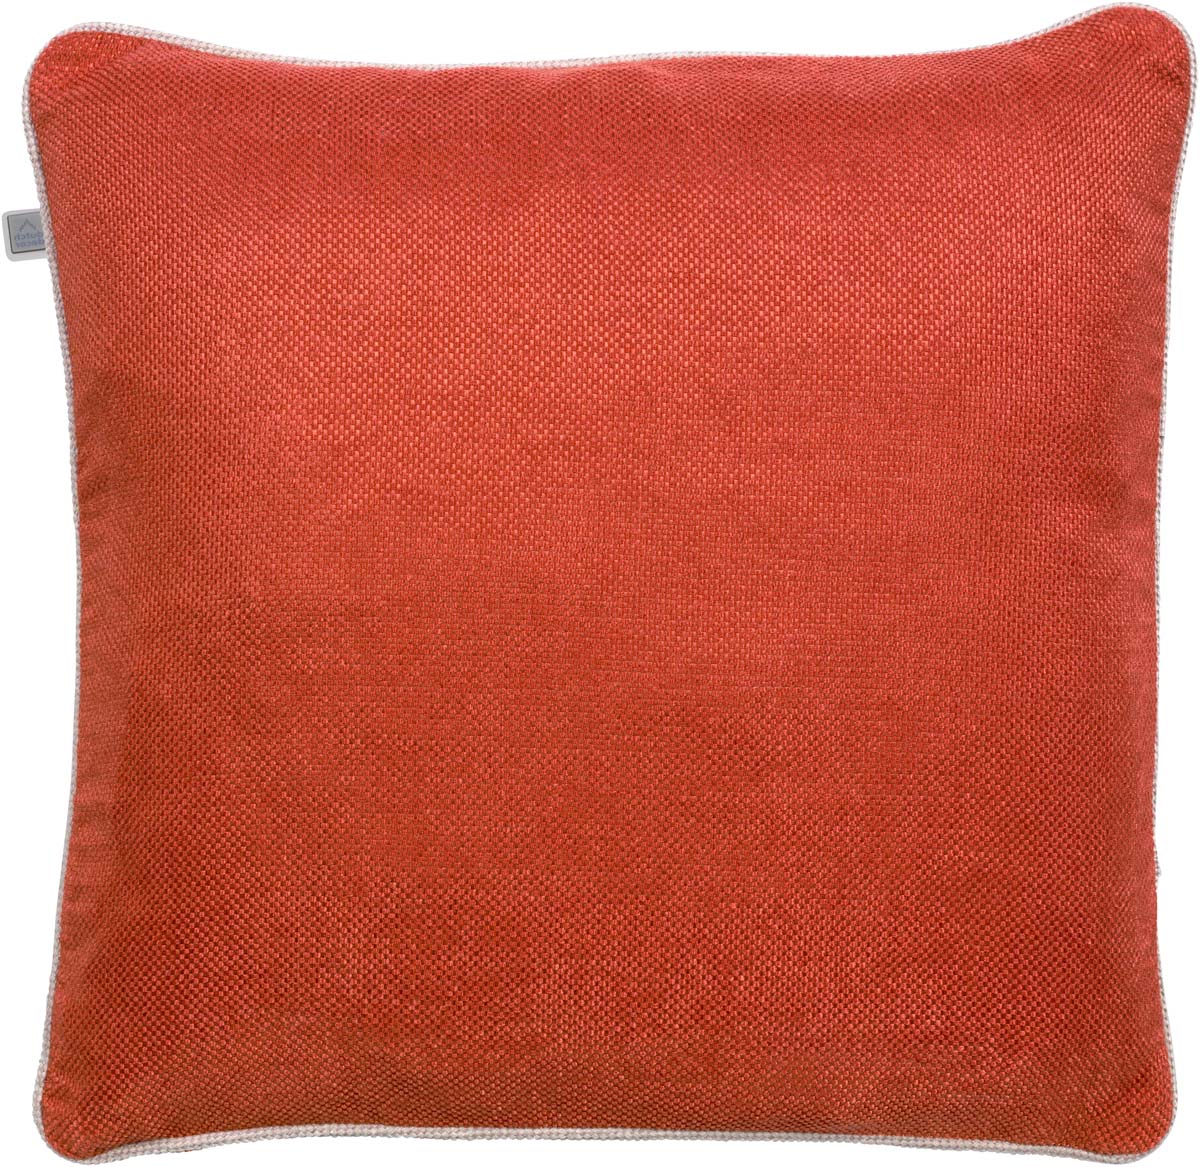 POORTA - Kussenhoes chili 45x45 cm - rood